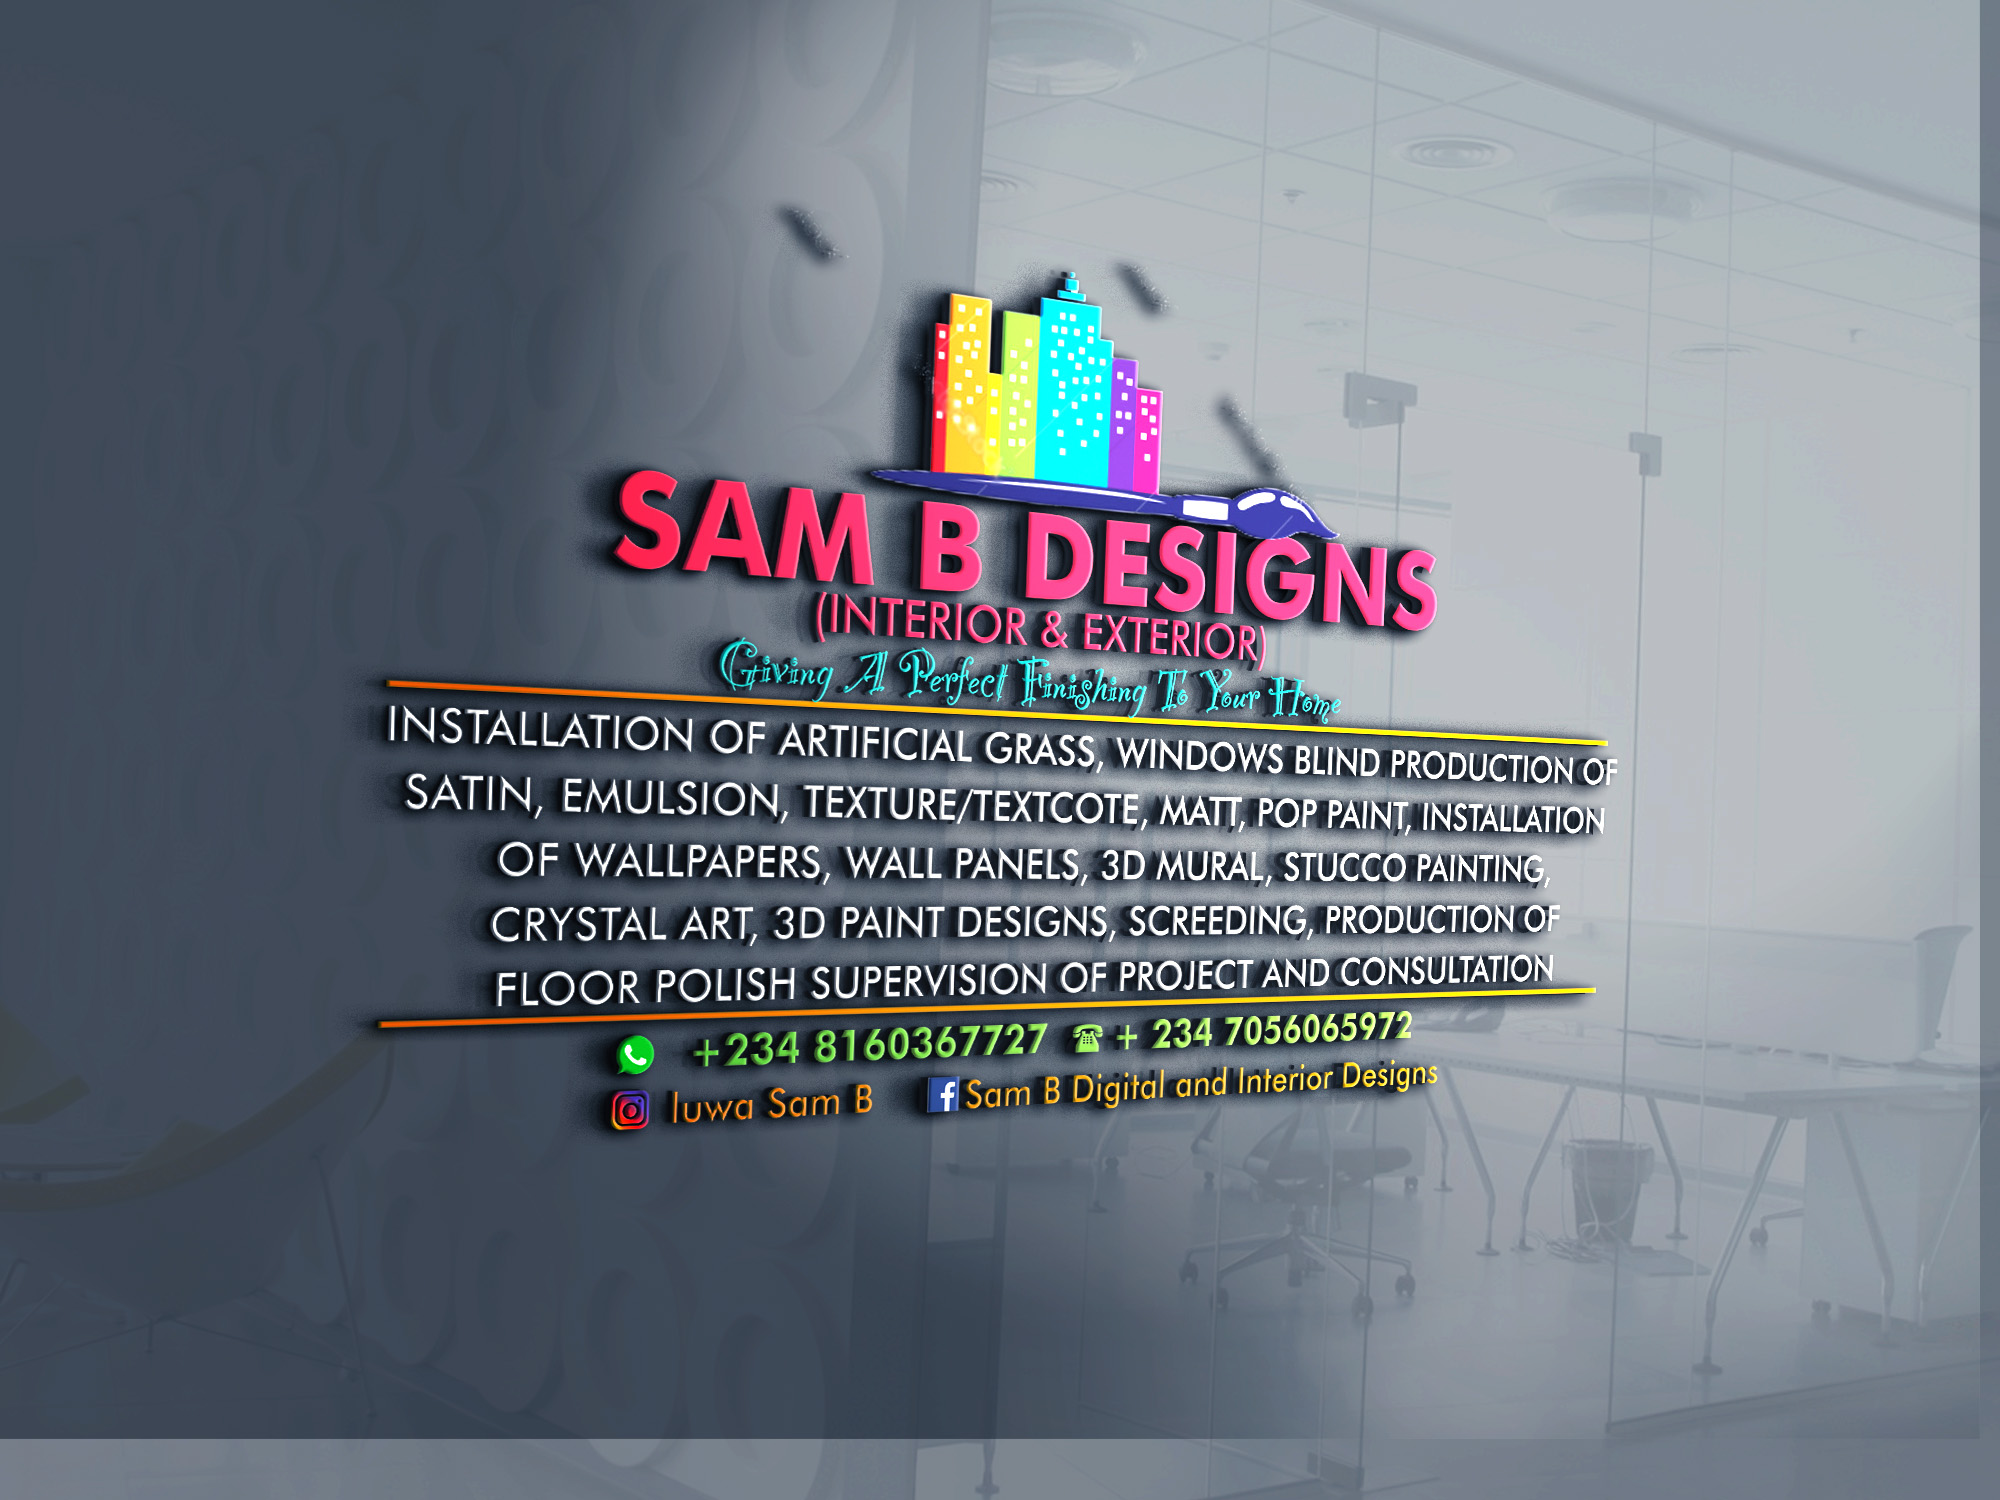 Sam B Interior And Exterior Designs provider